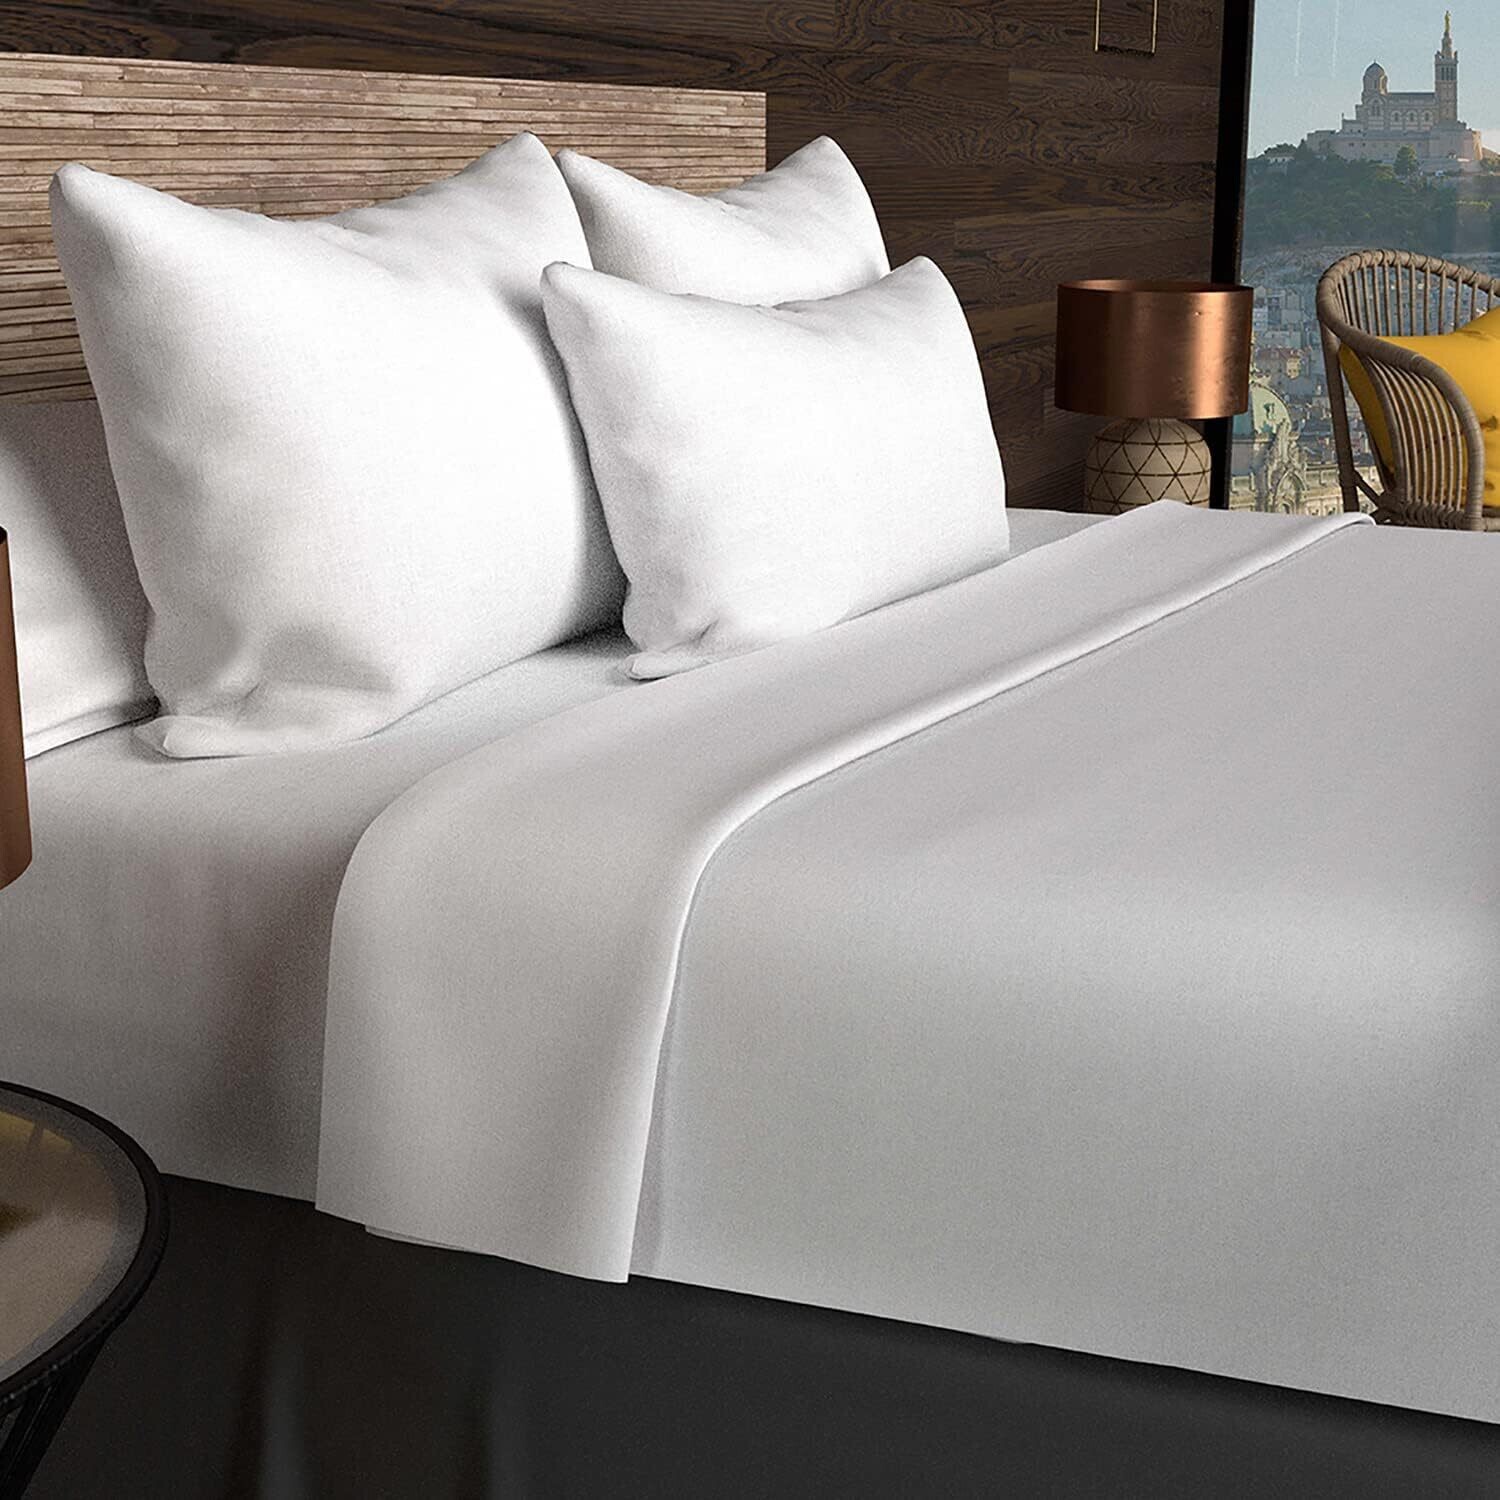 Cozy Bedsheets, plain colored 4pcs Flat sheet polycotton & Pillow cases king size 230x260cms (white)